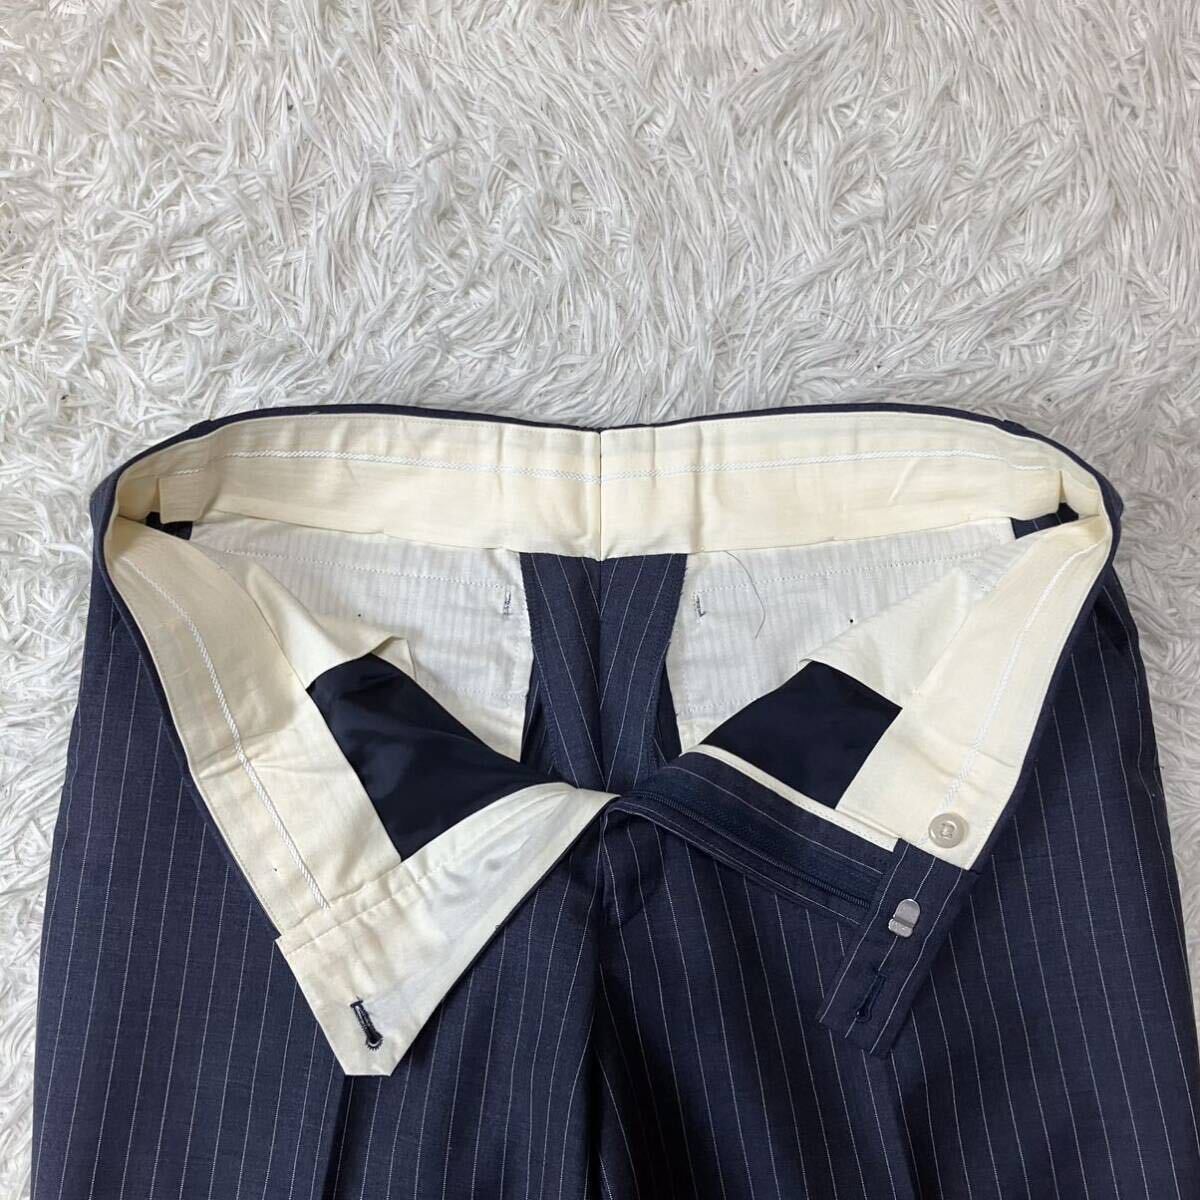  super rare XXL [ ultimate beautiful goods ] Paul Smith suit setup SOHO Zegna Zegna dot Rainbow stripe navy navy blue color XL2 PAUL SMITH